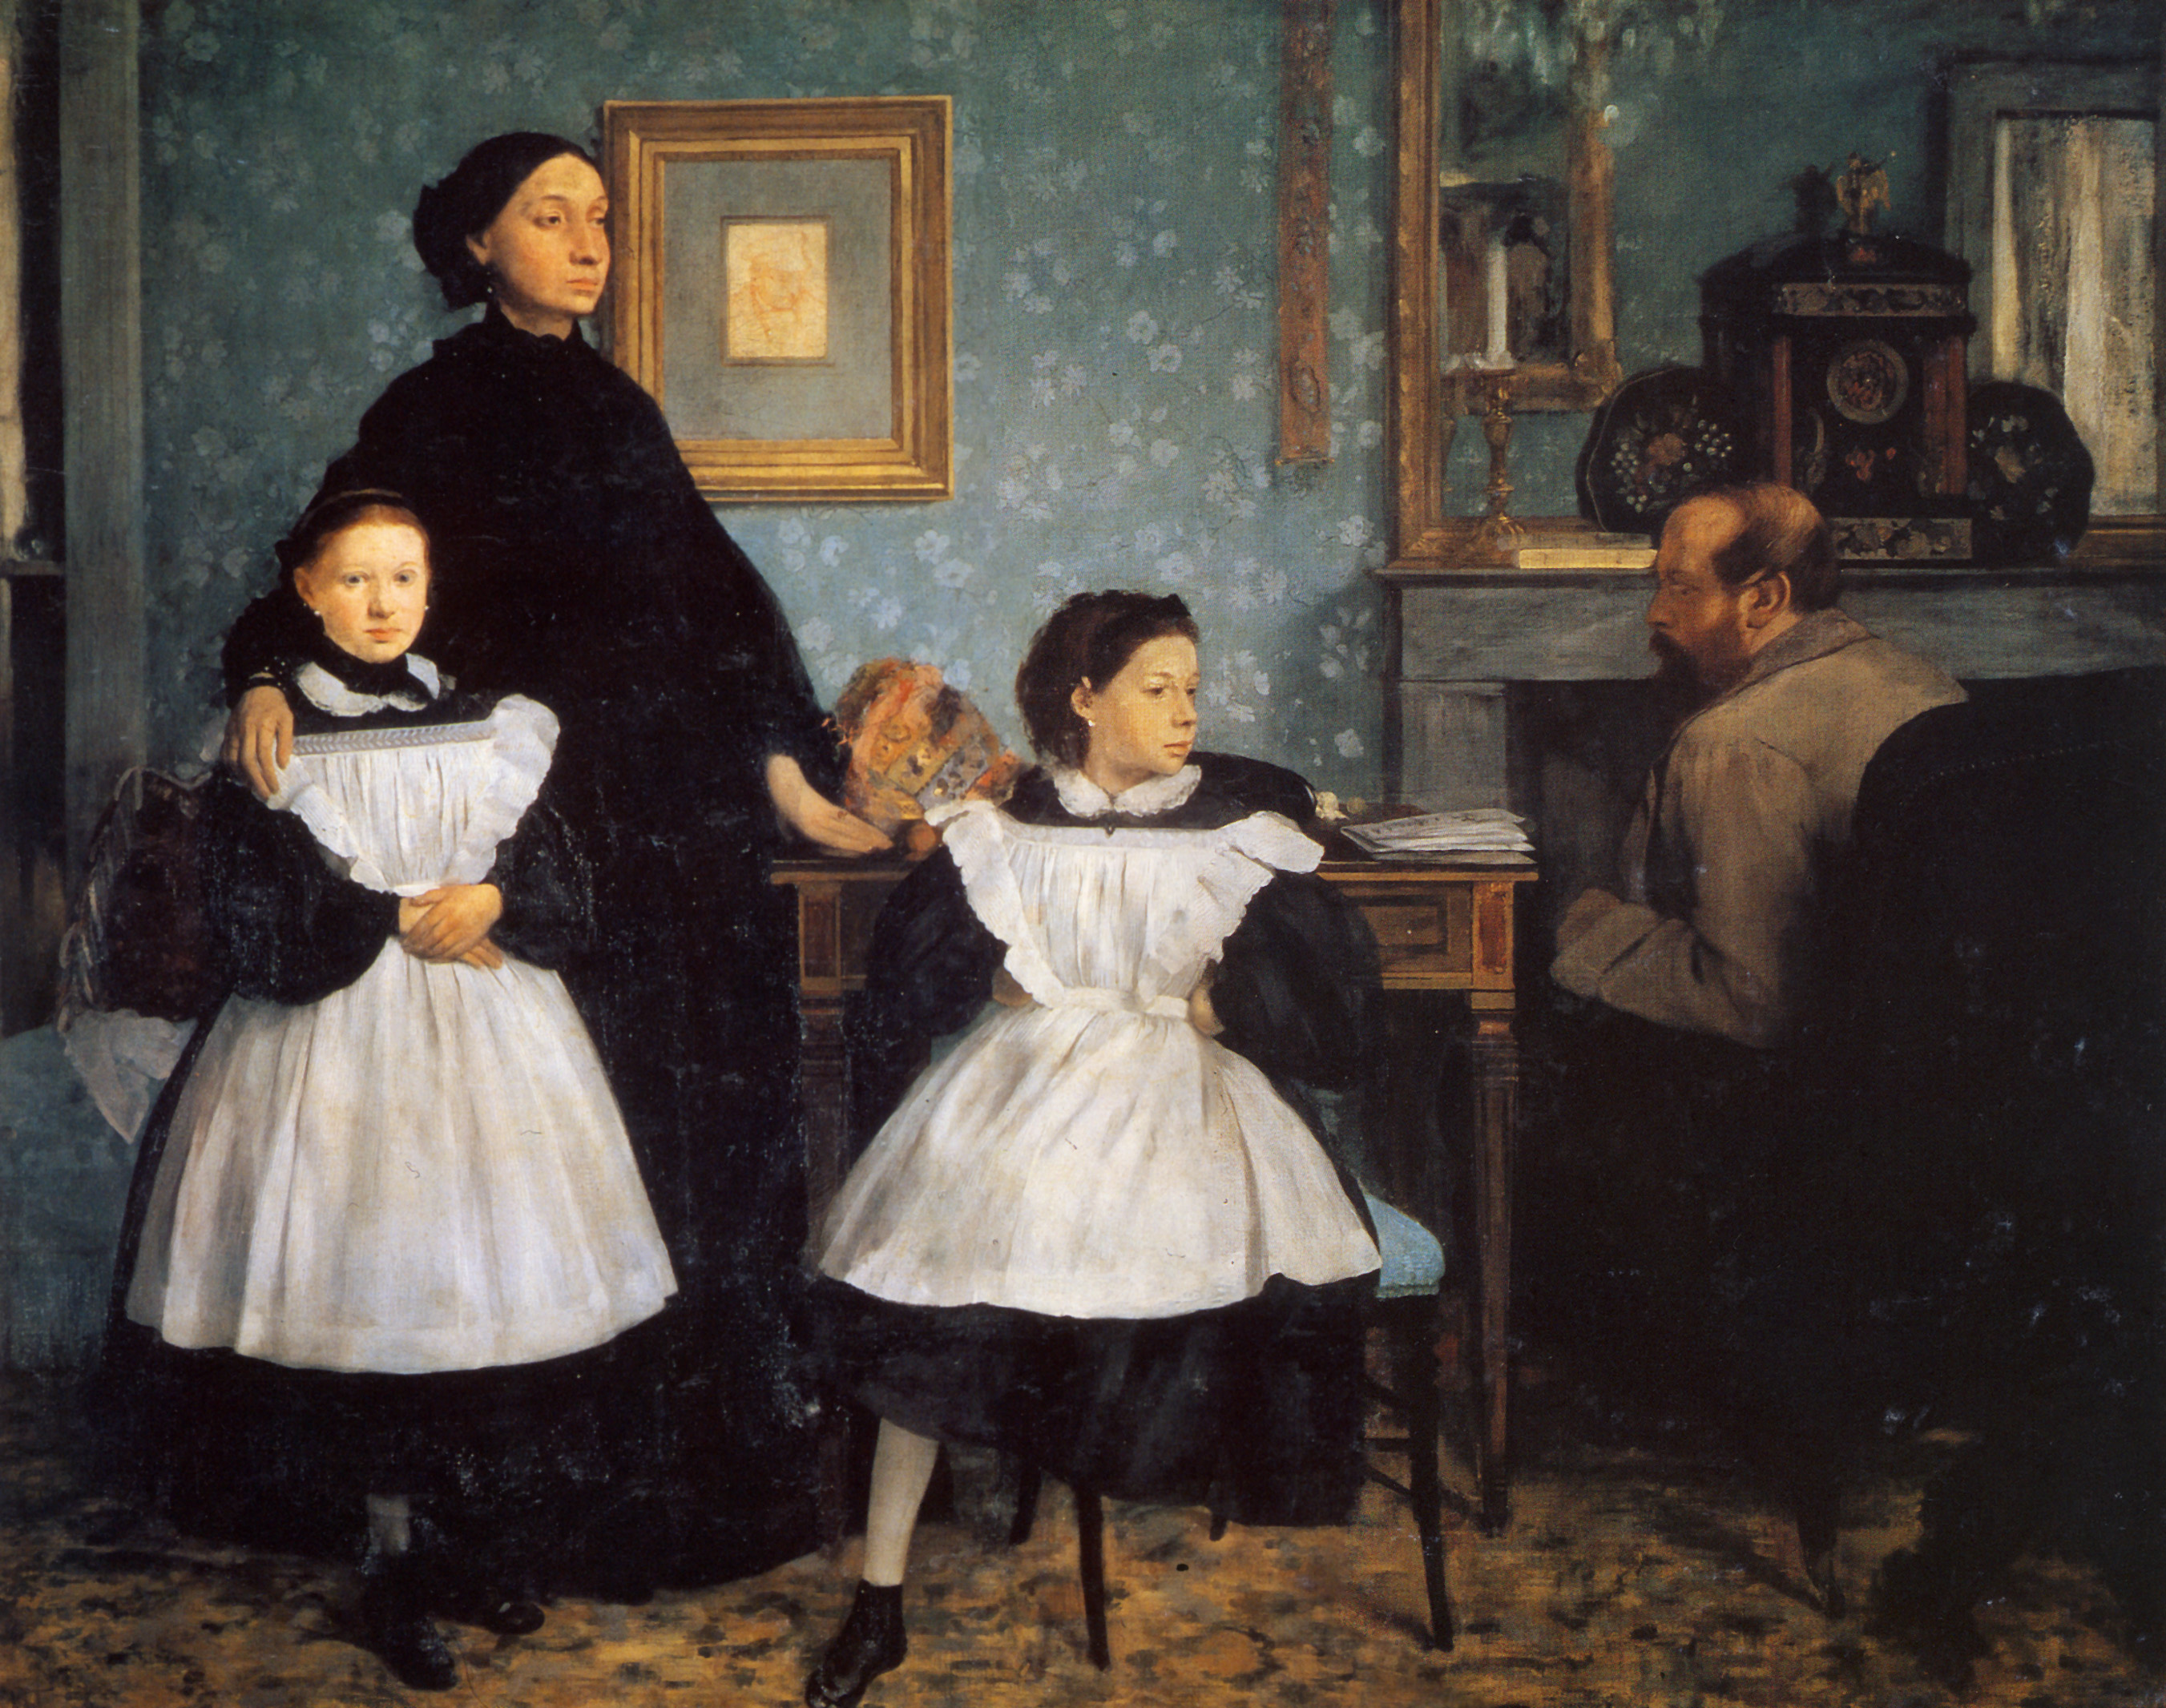 La familia Belleli by Edgar Degas - 1860-1862 Musée d'Orsay